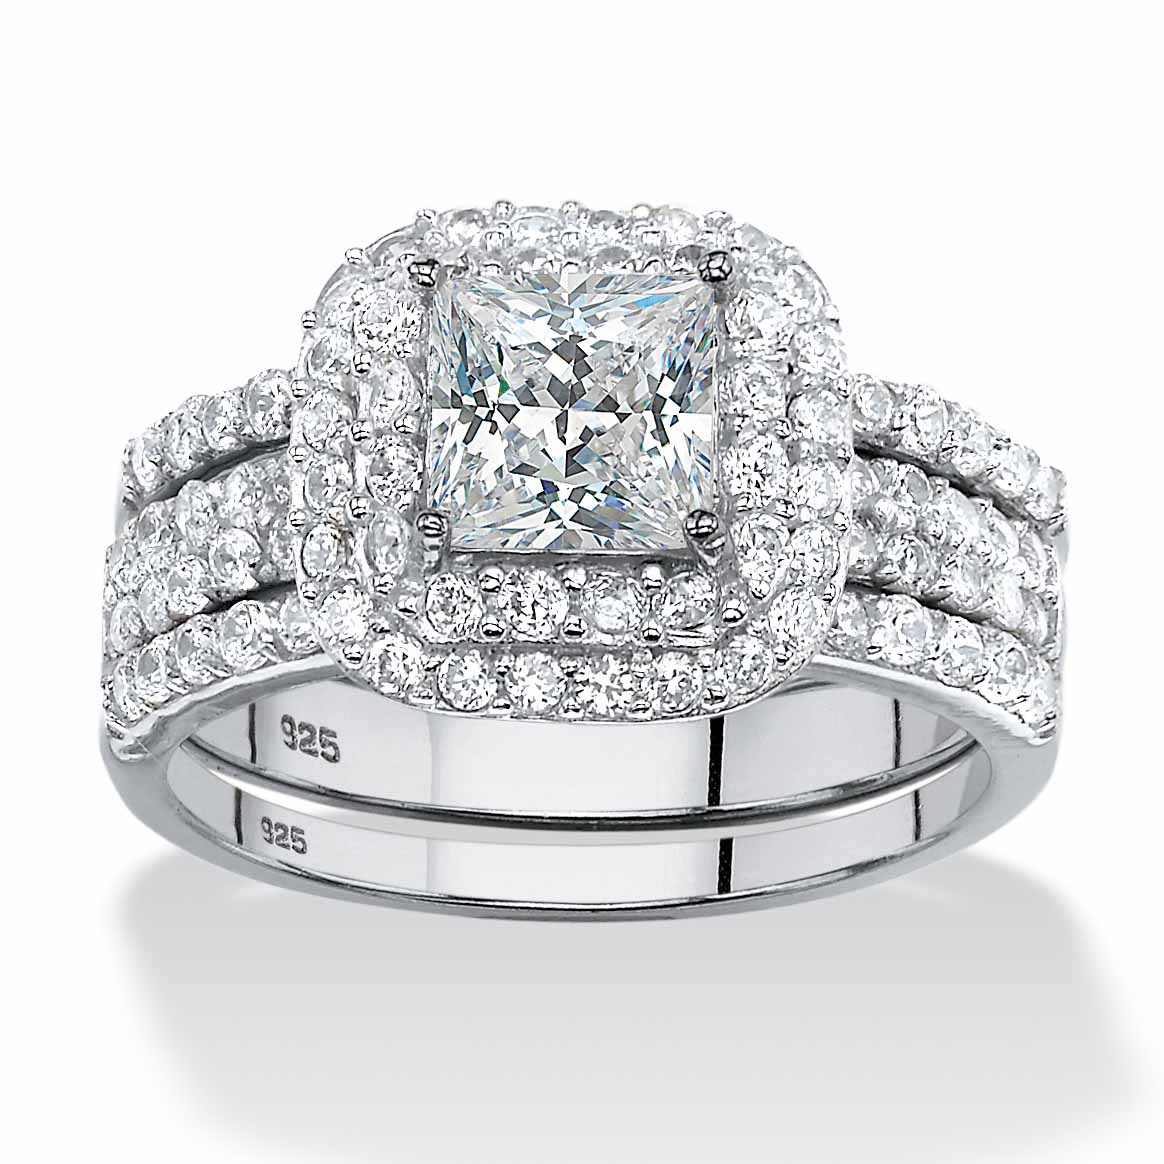 Sterling silver wedding ring sets